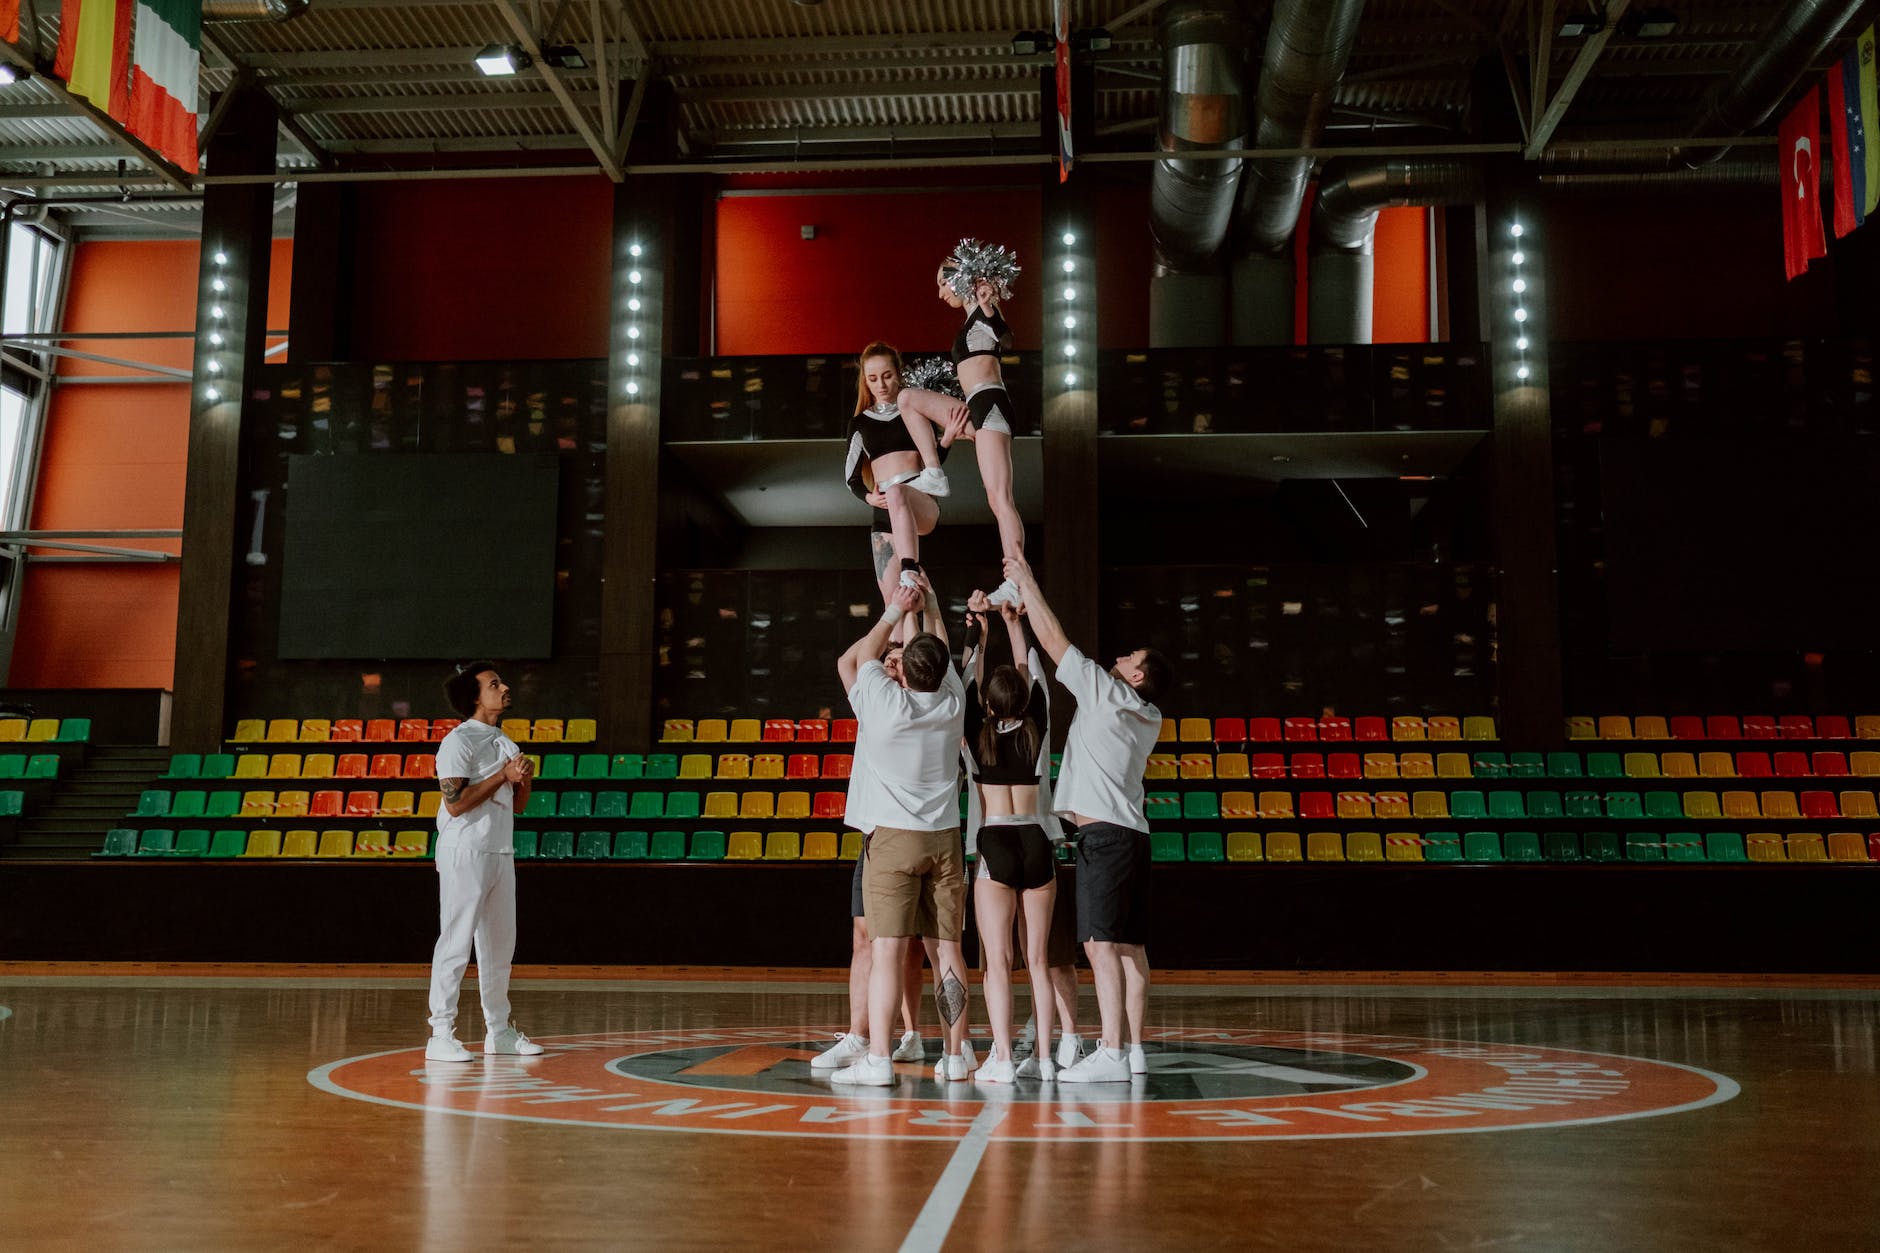 cheerleading squad practicing inside the gymnasium